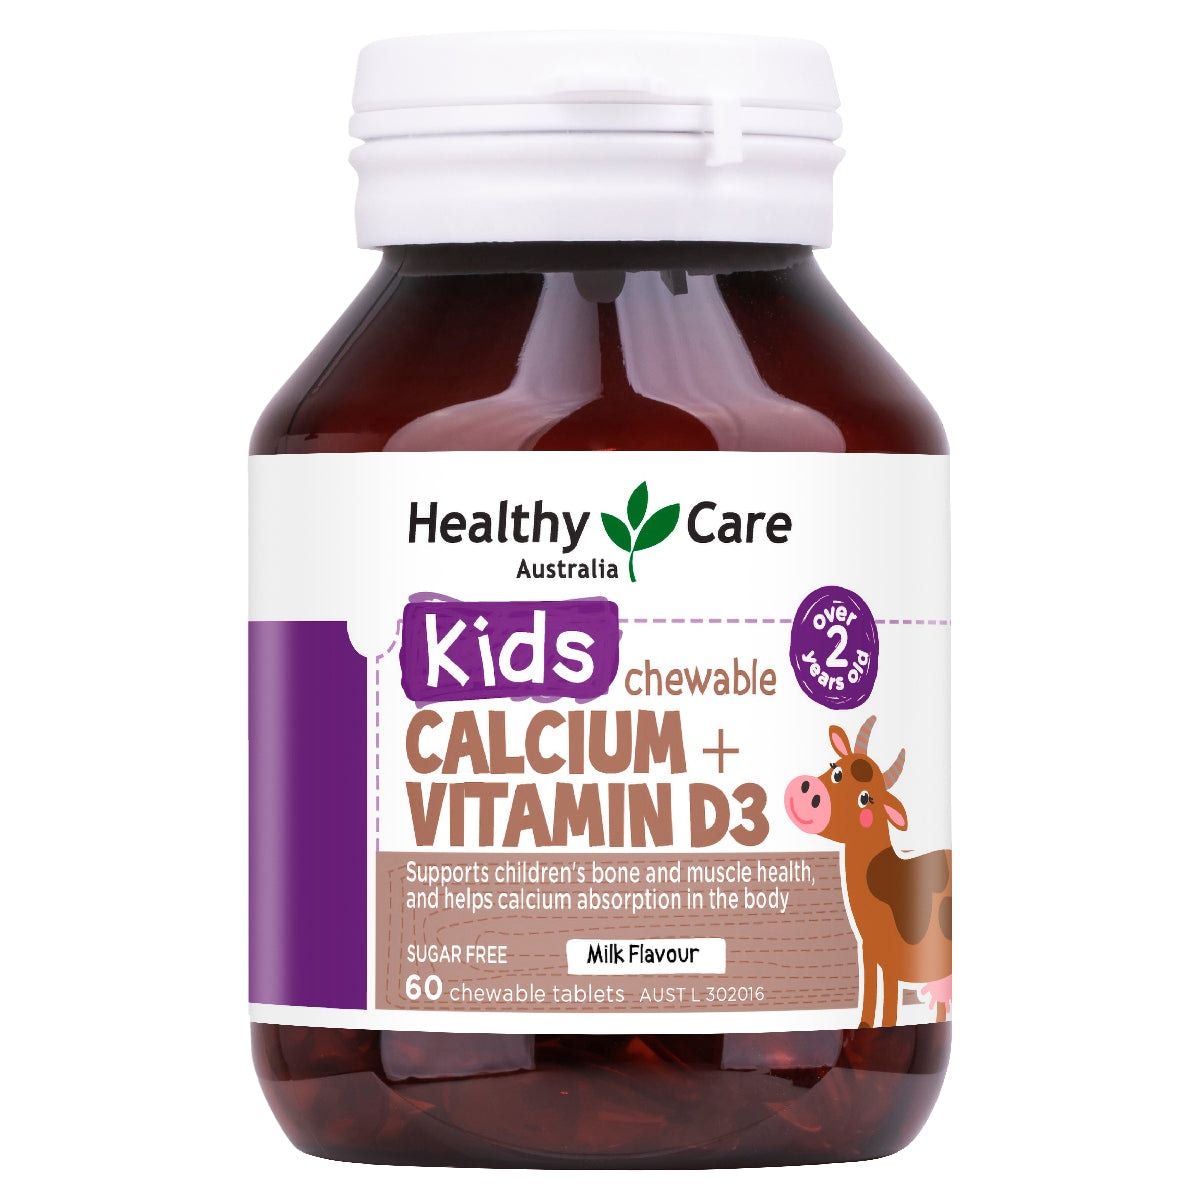 Healthy Care kids Chewable Calcium + Vitamin D3 60 Tablets Australia